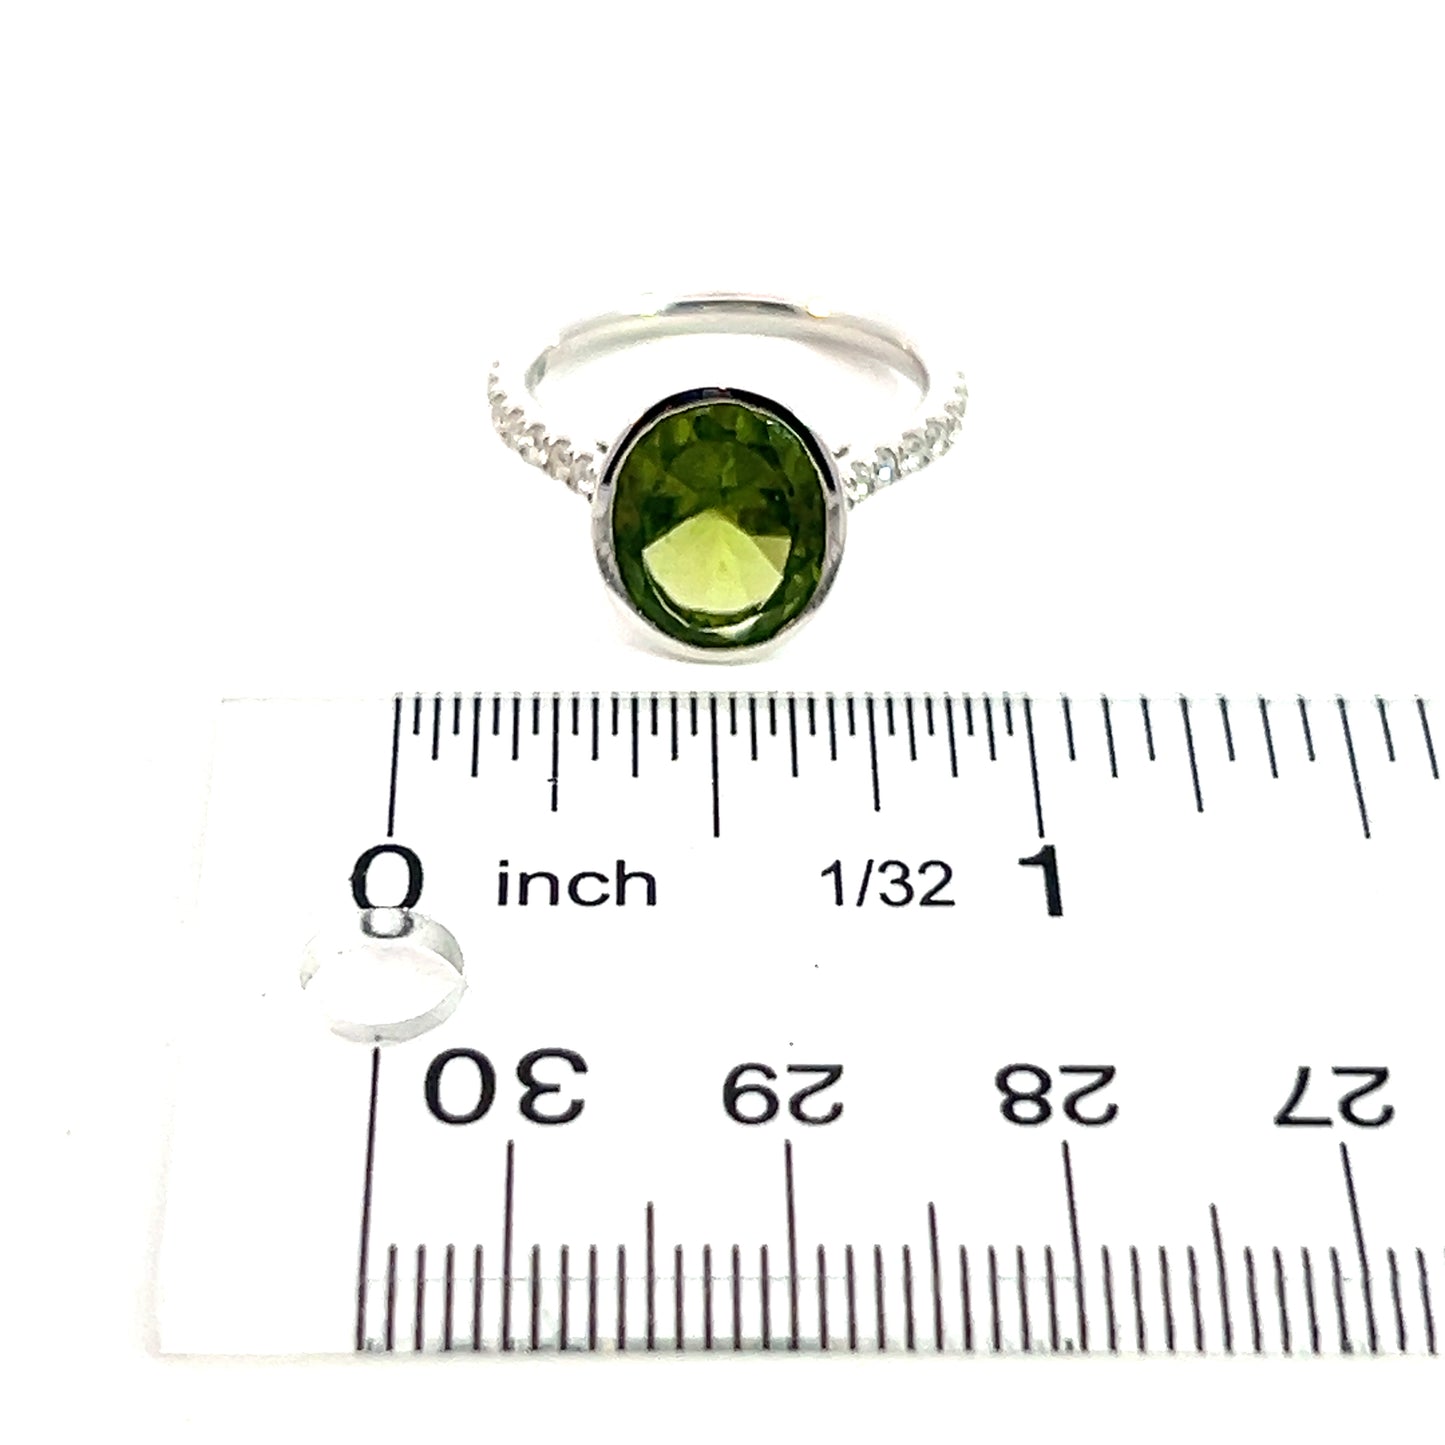 Natural Peridot Diamond Ring 6.5 14k W Gold 3.49 TCW Certified $4,950 310621